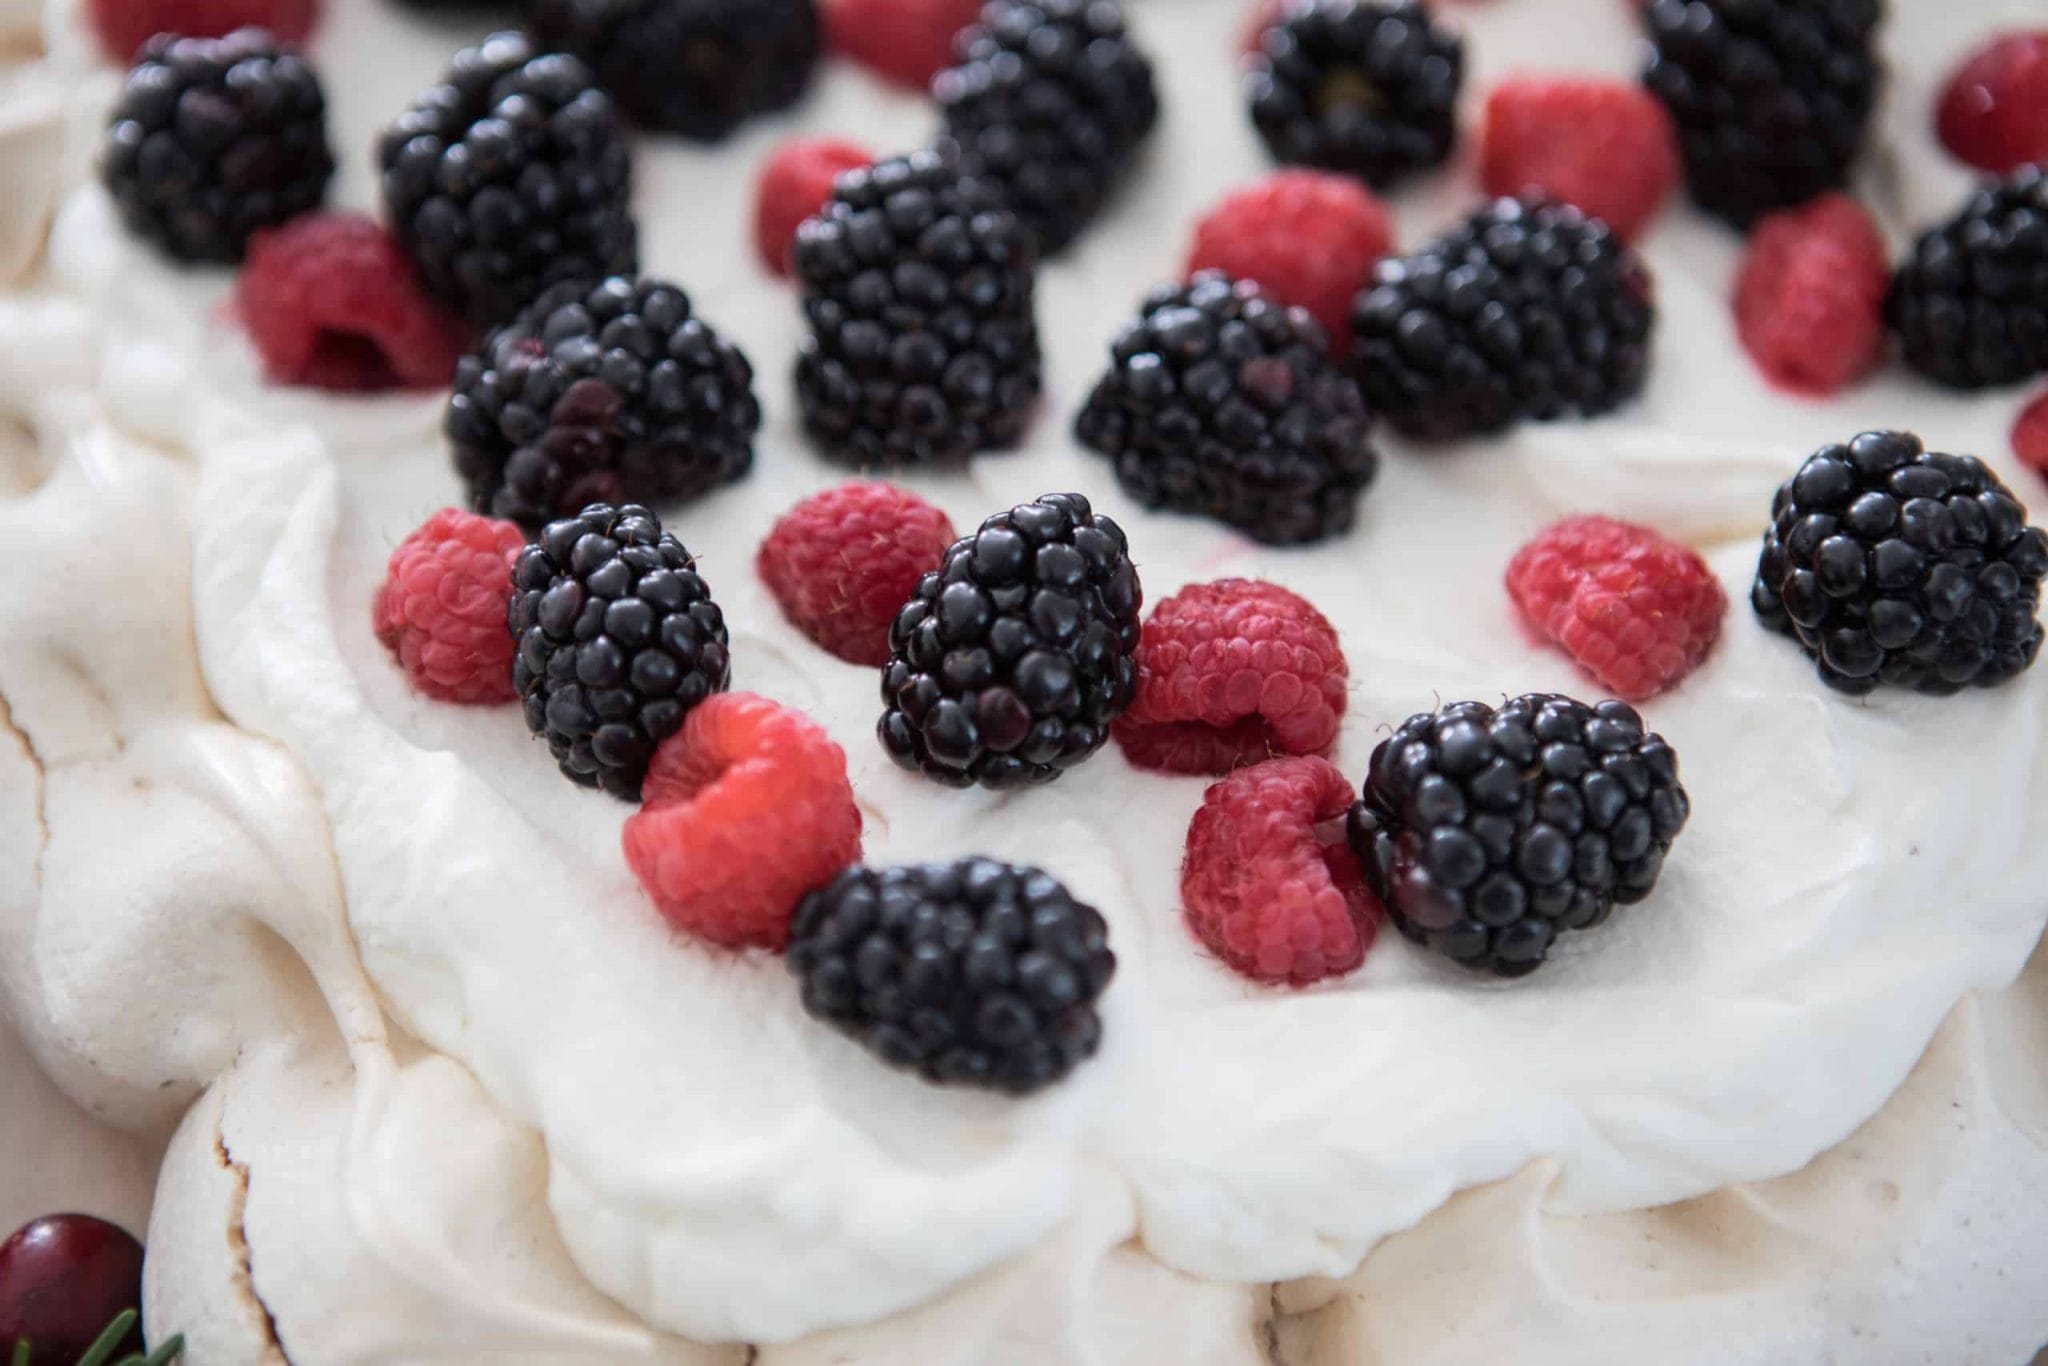 Razzberries and blackberries on a white cake